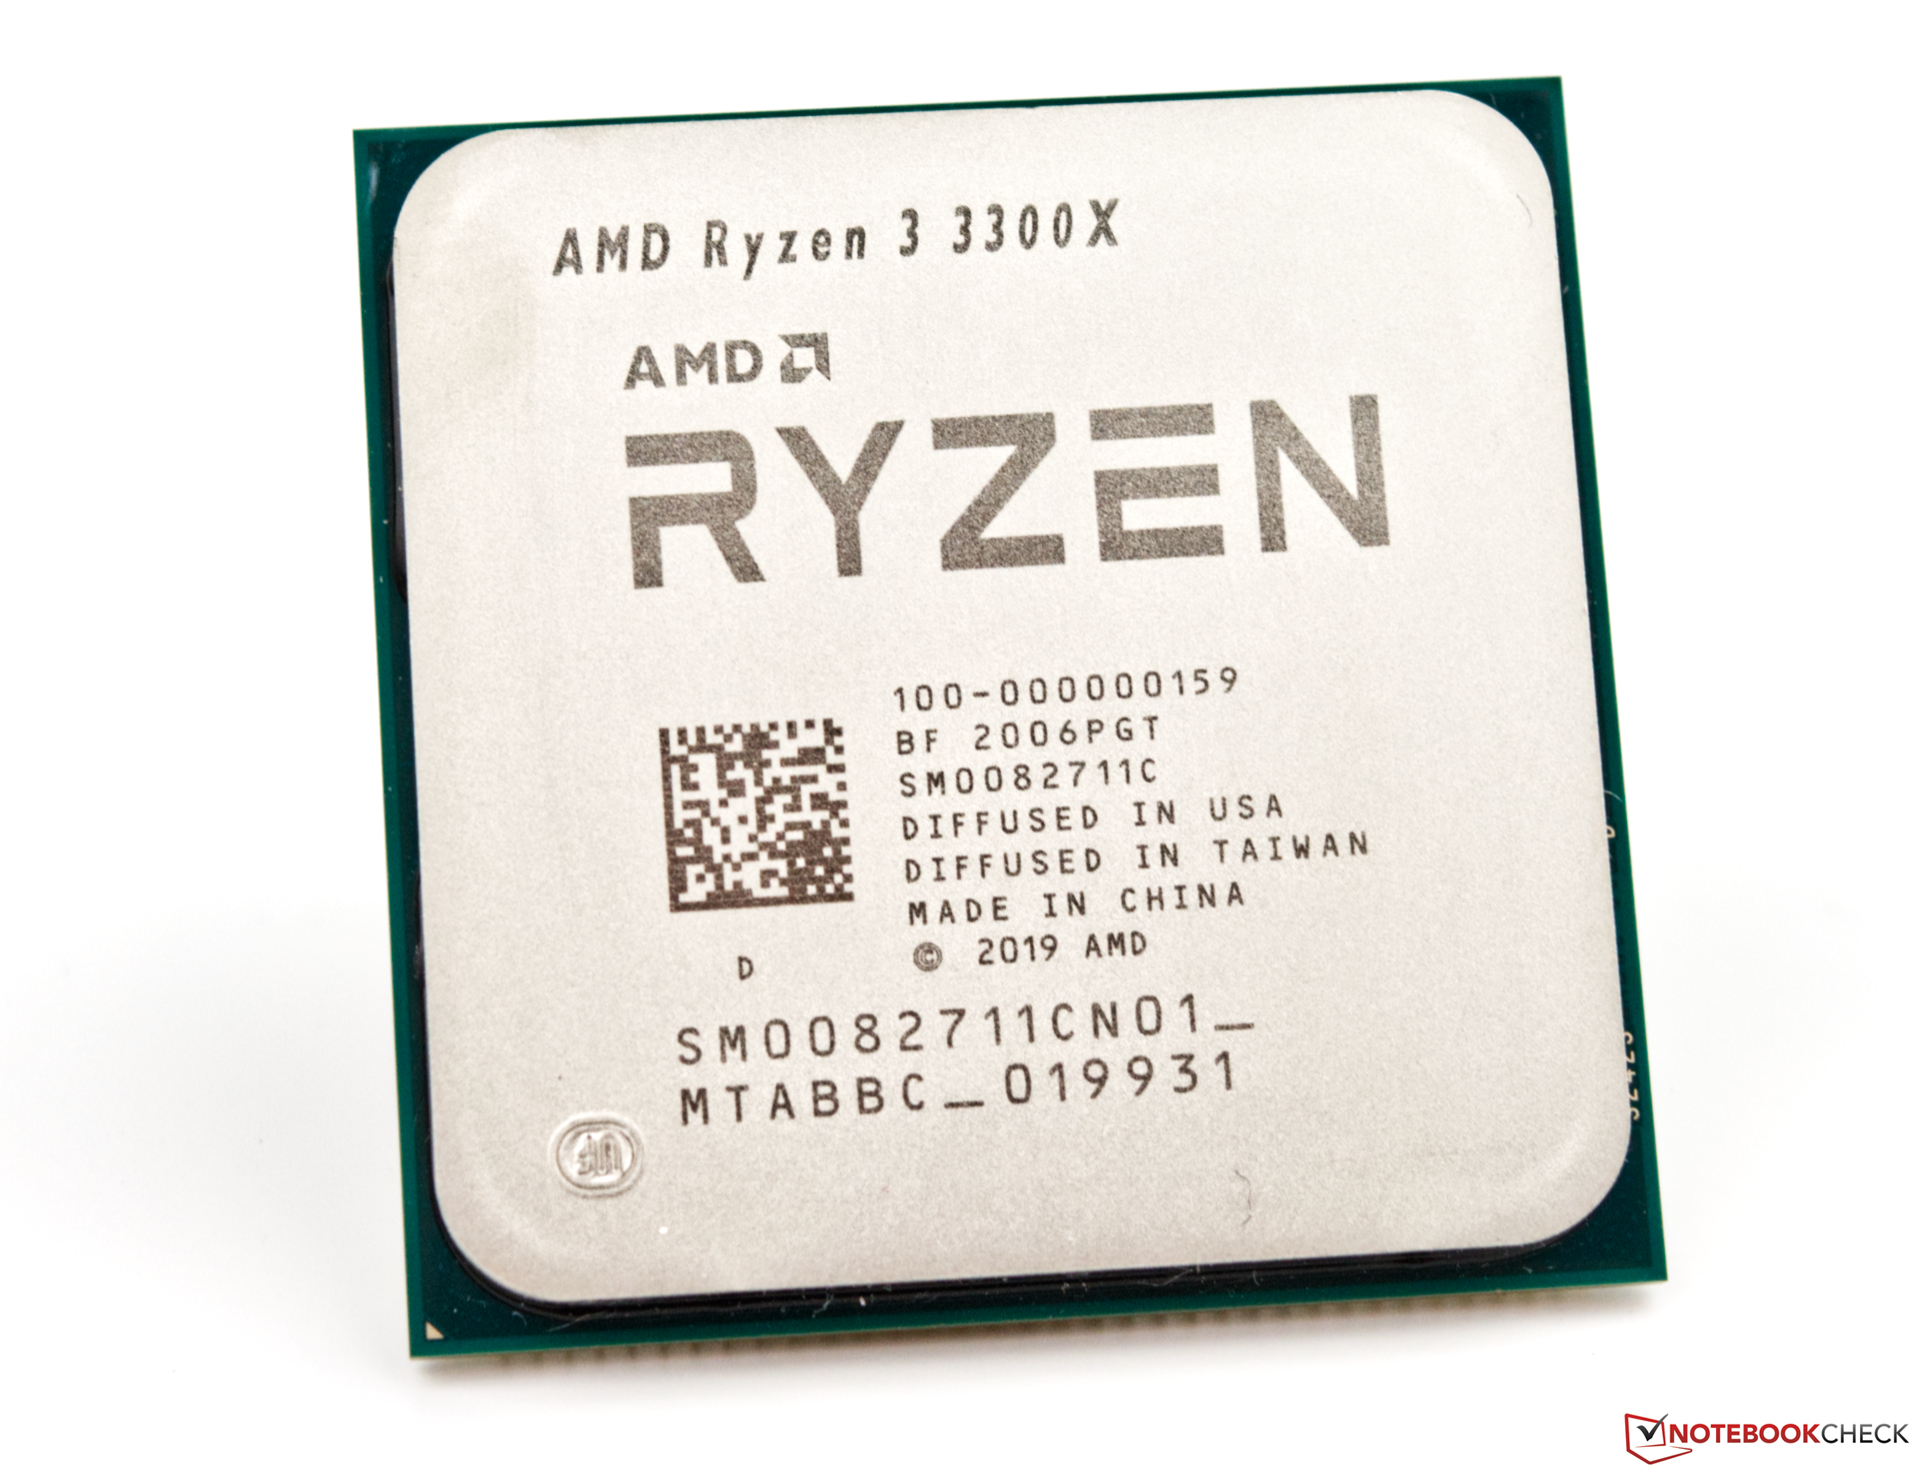 AMD Ryzen 3 3300X Processor - Benchmarks and Specs - NotebookCheck 